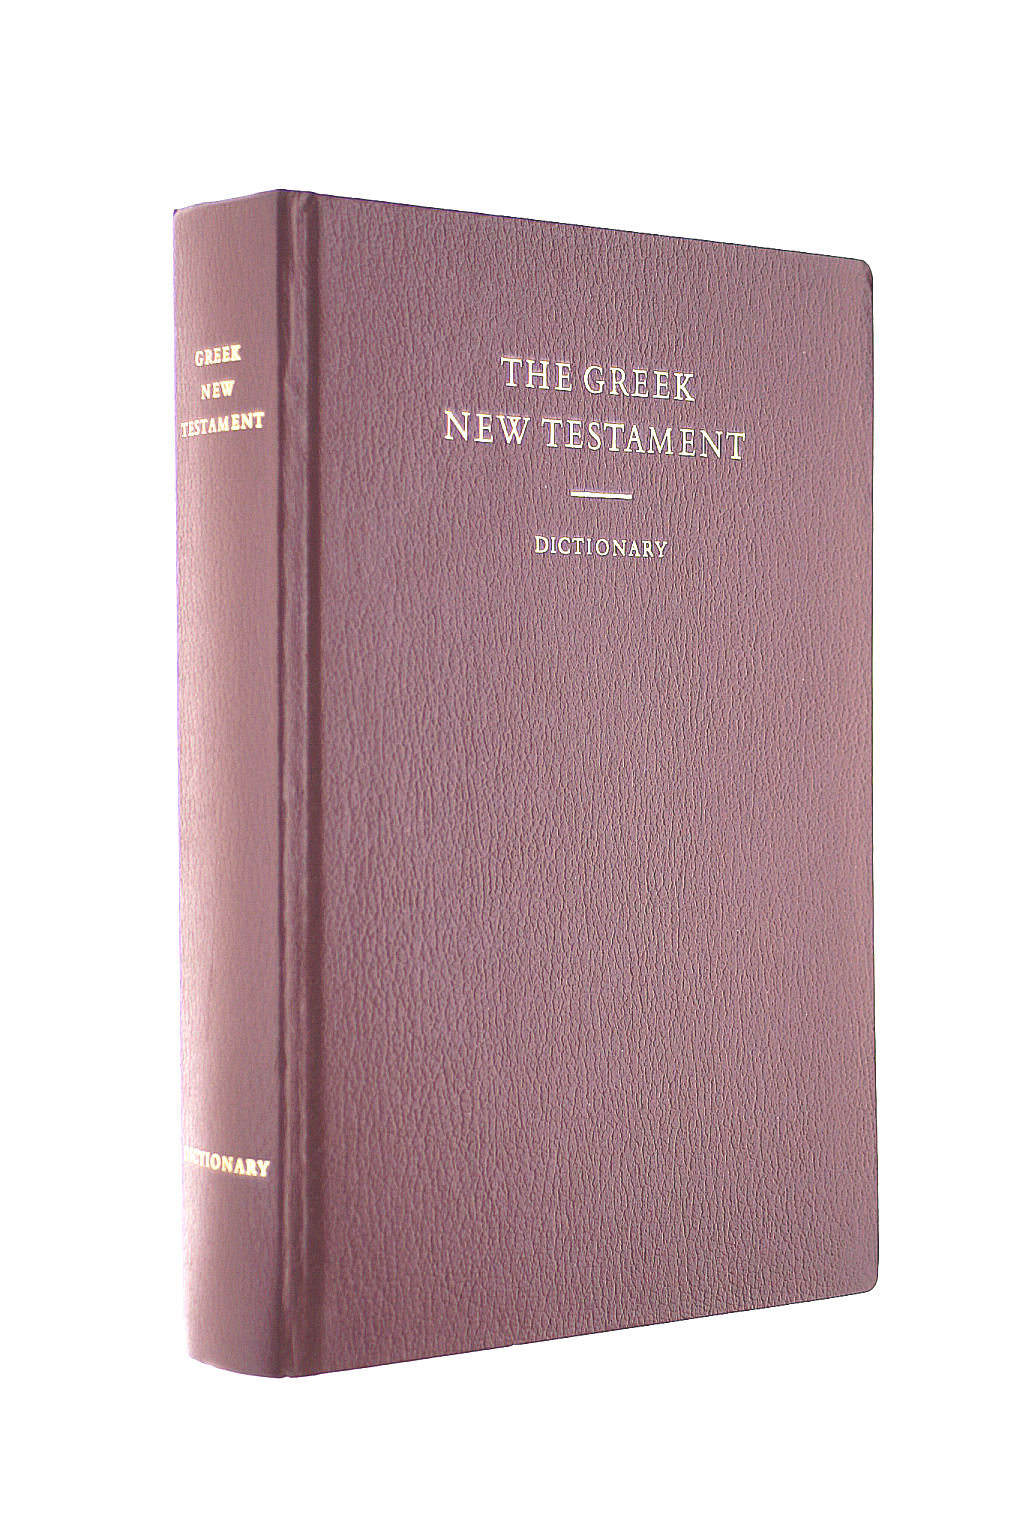 ALAND, KURT - The Greek New Testament, with Dictionary